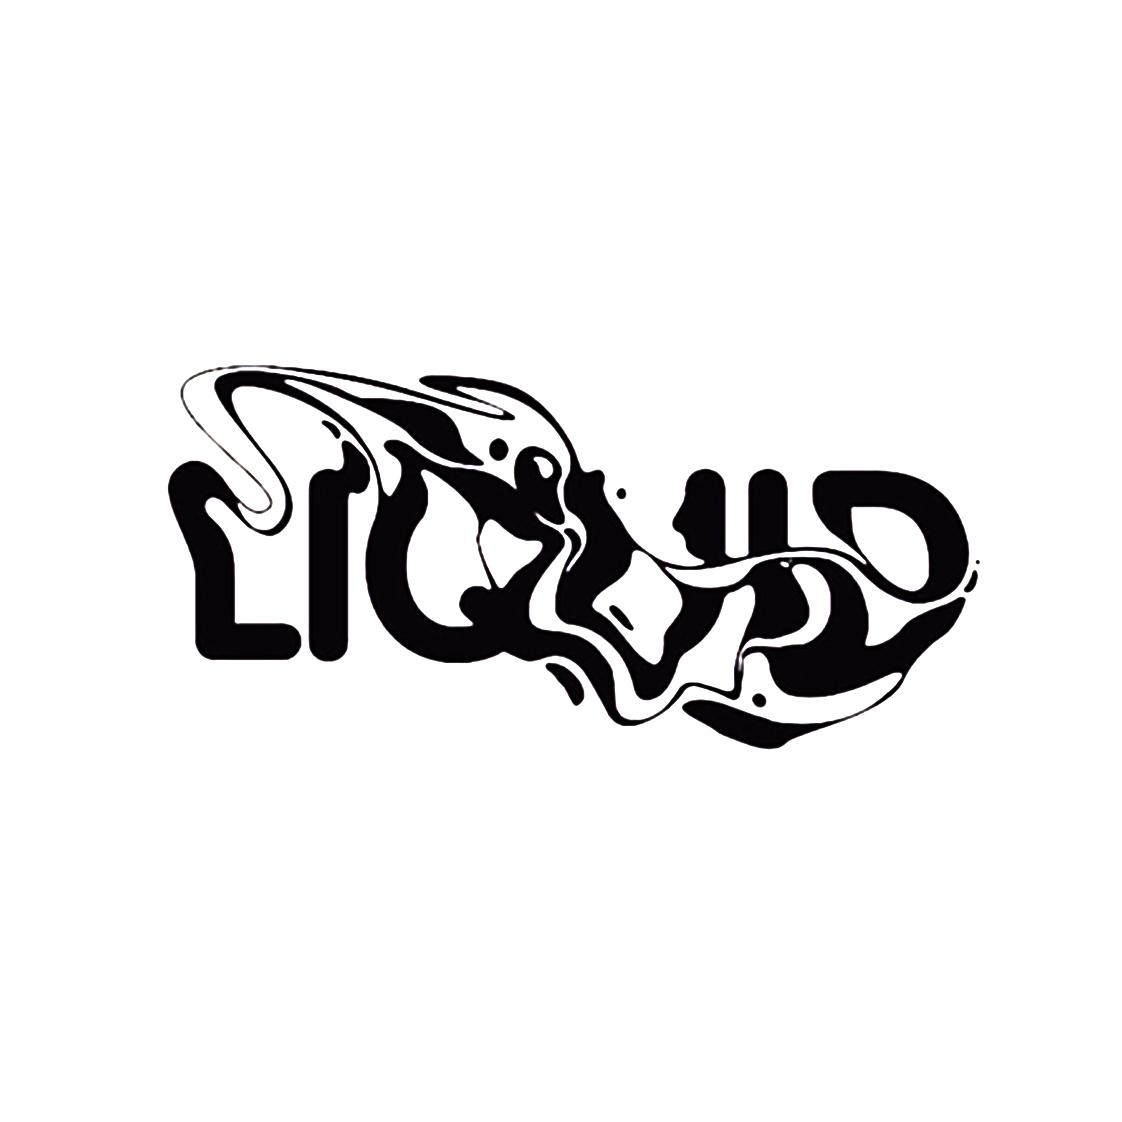 LIQUID旅行箱商标转让费用买卖交易流程